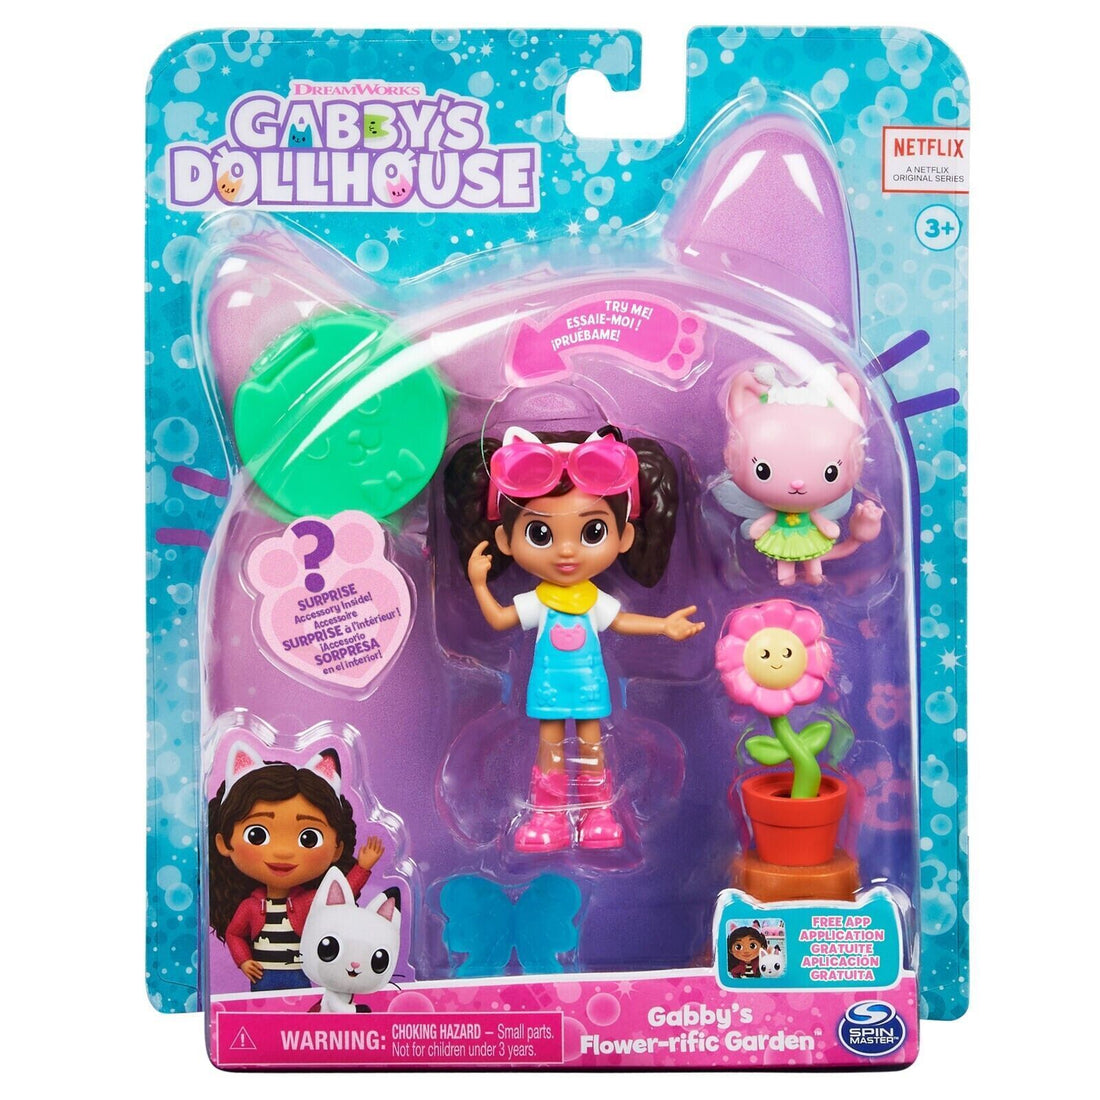 Gabby Dollhouse & Soft Toys, Vehicles, Playsets - Your Child's Dream Playtime! - Flower-rific Garden Set